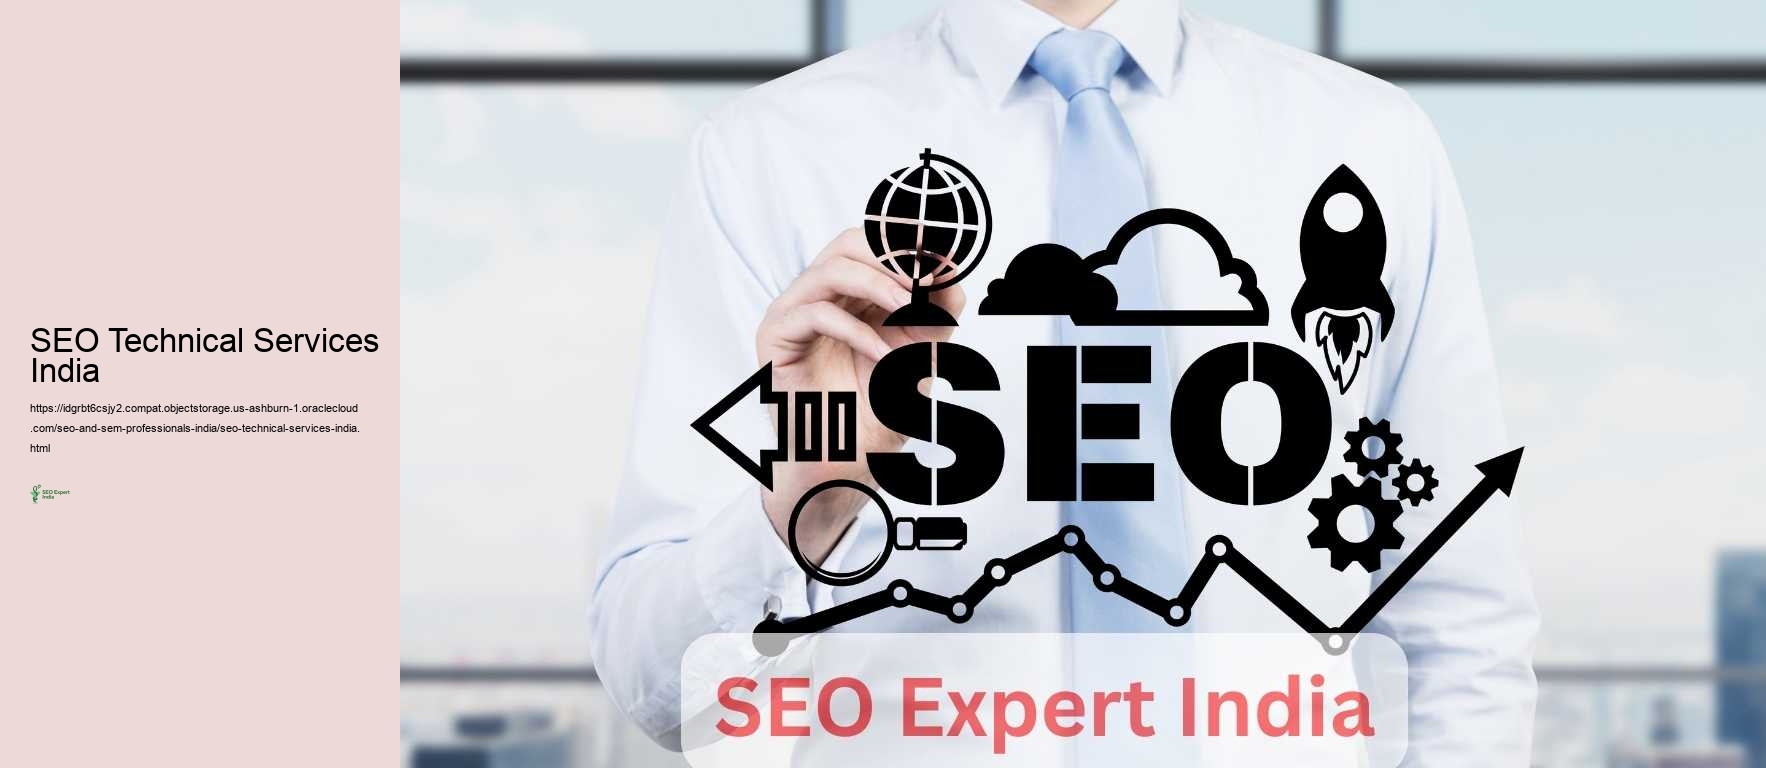 SEO Technical Services India